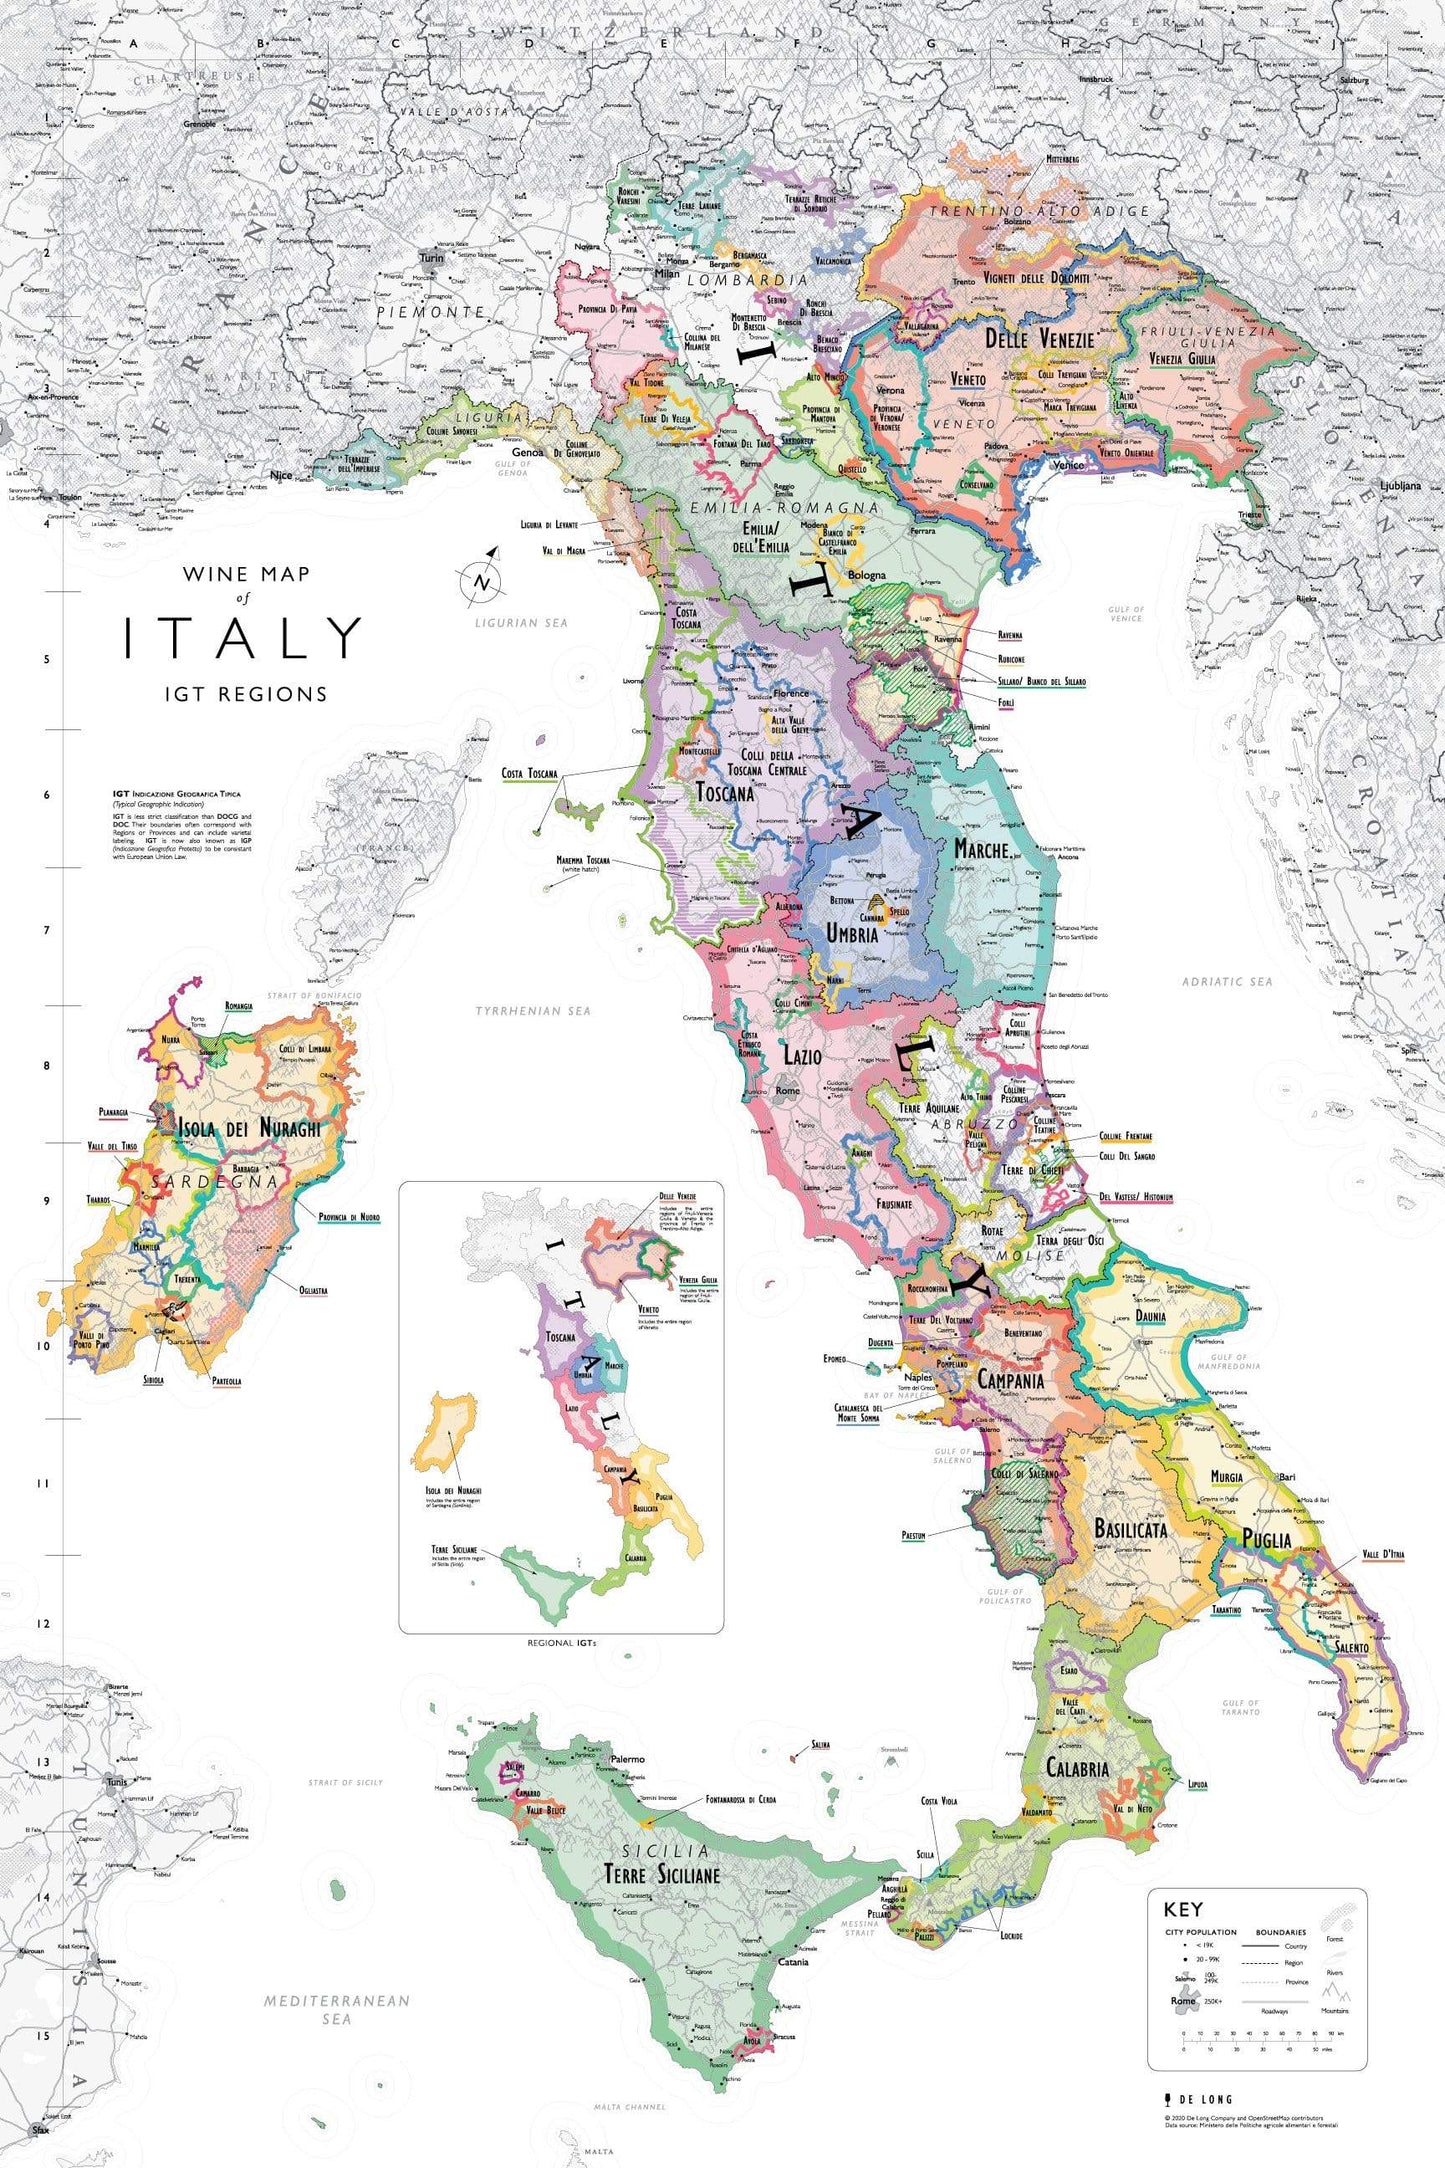 Wine map of Italy, bookshelf edition